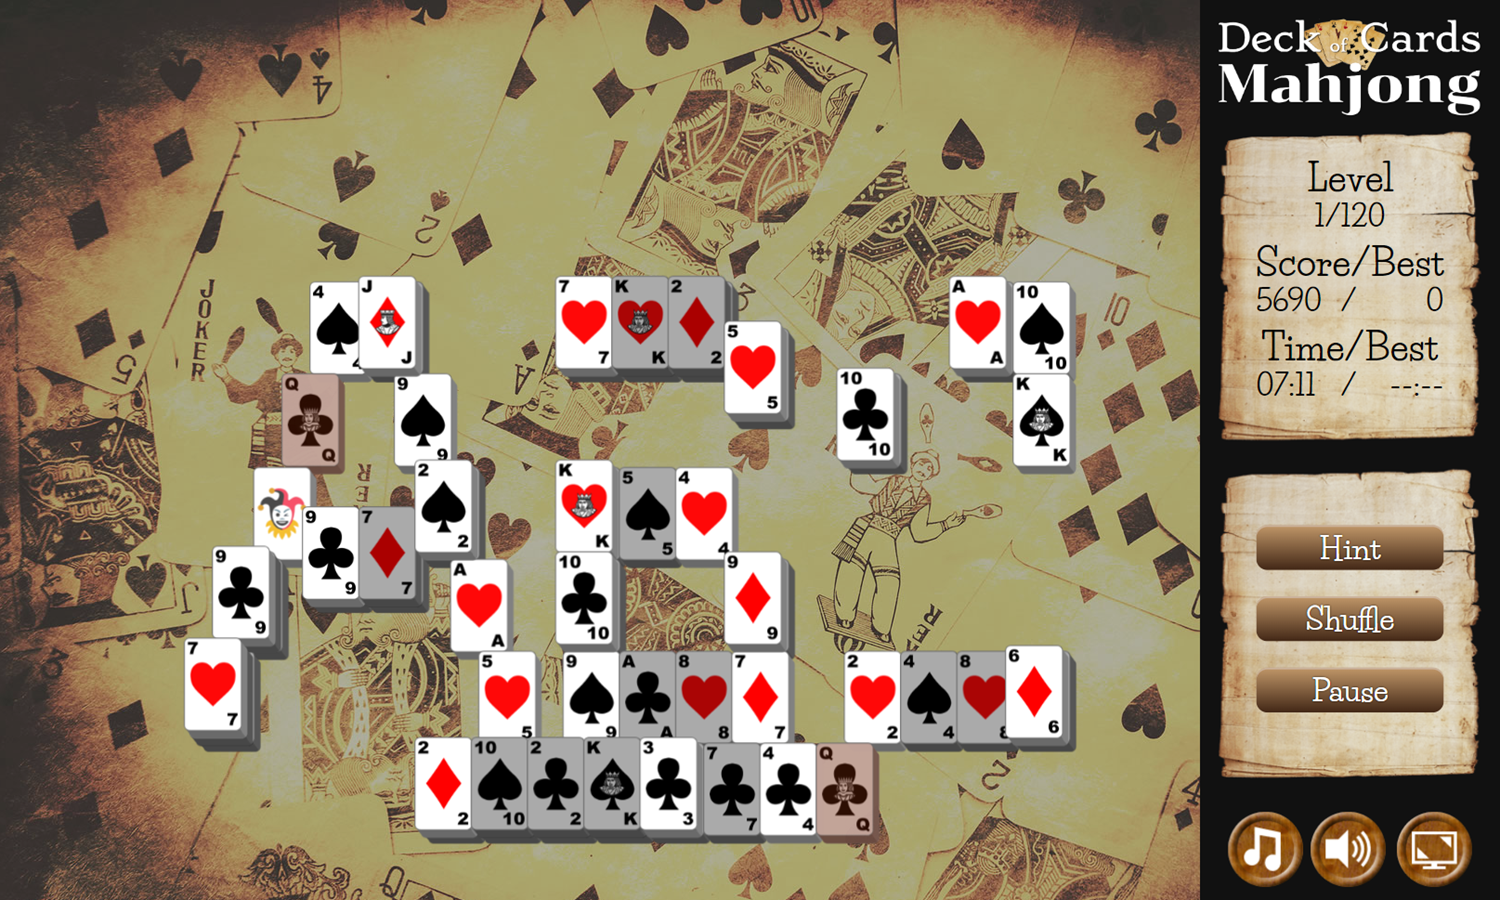 Deck of Cards Mahjong Game Level Play Screenshot.